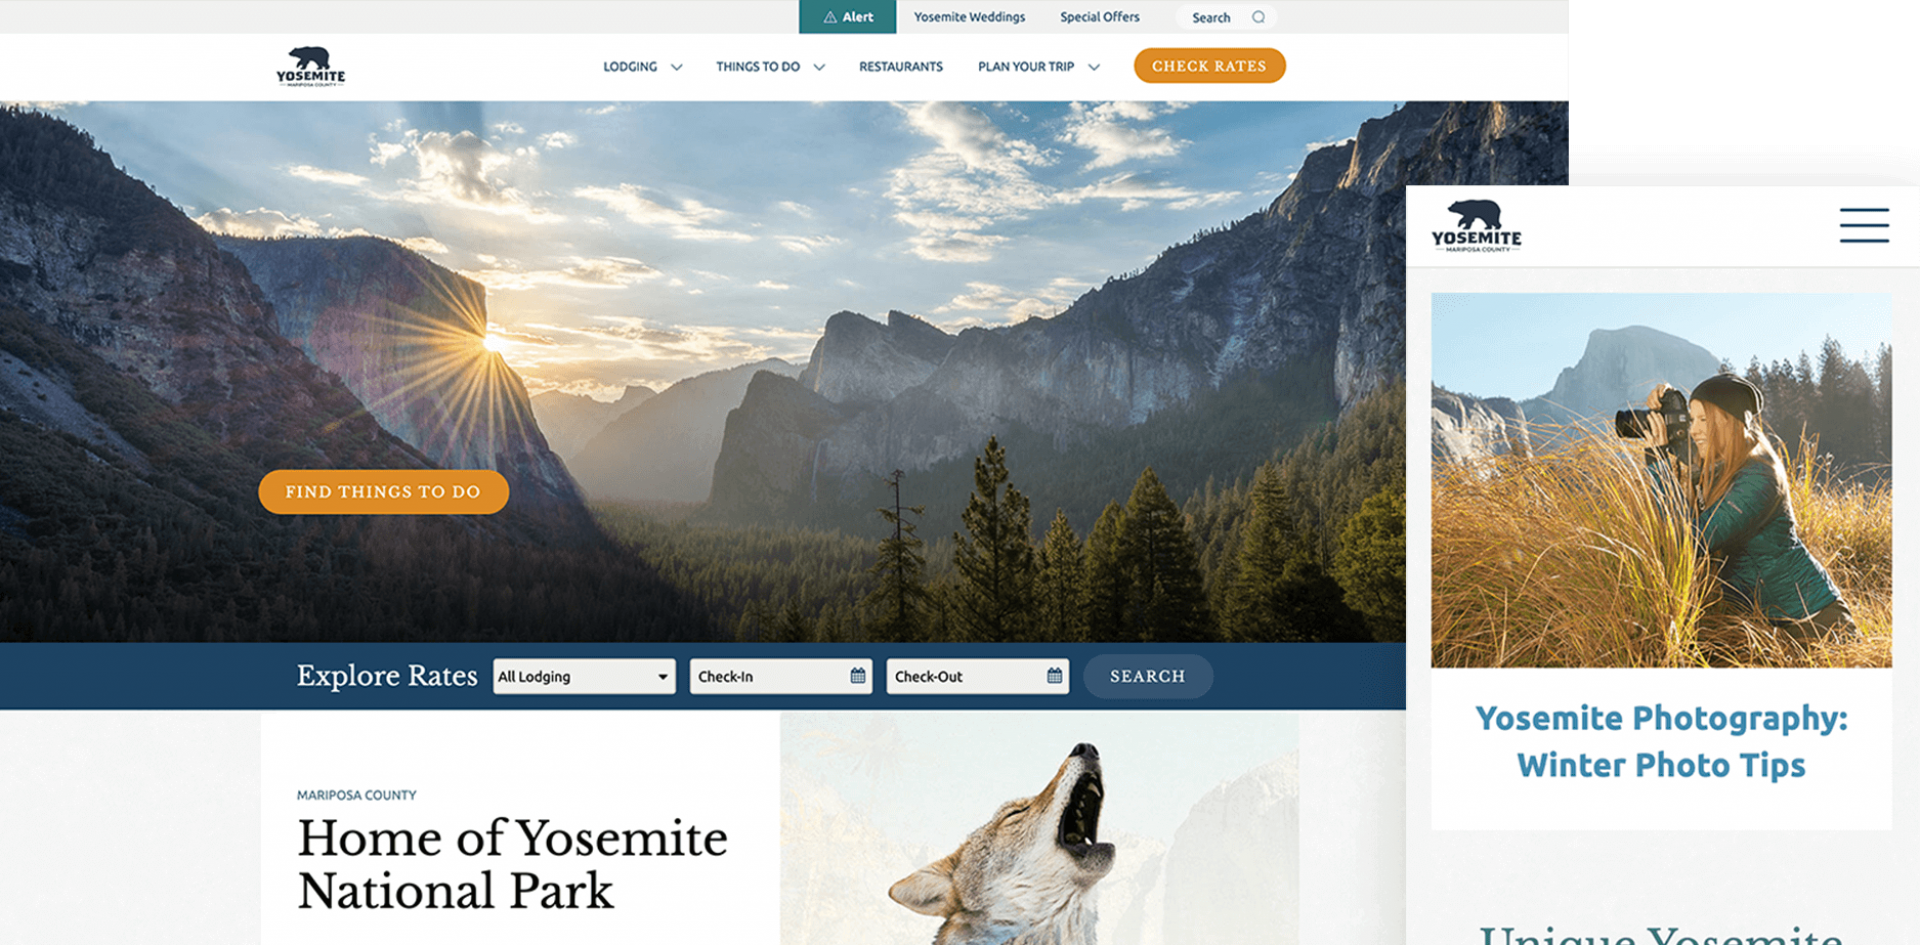 Blazing New Virtual Trails in Yosemite